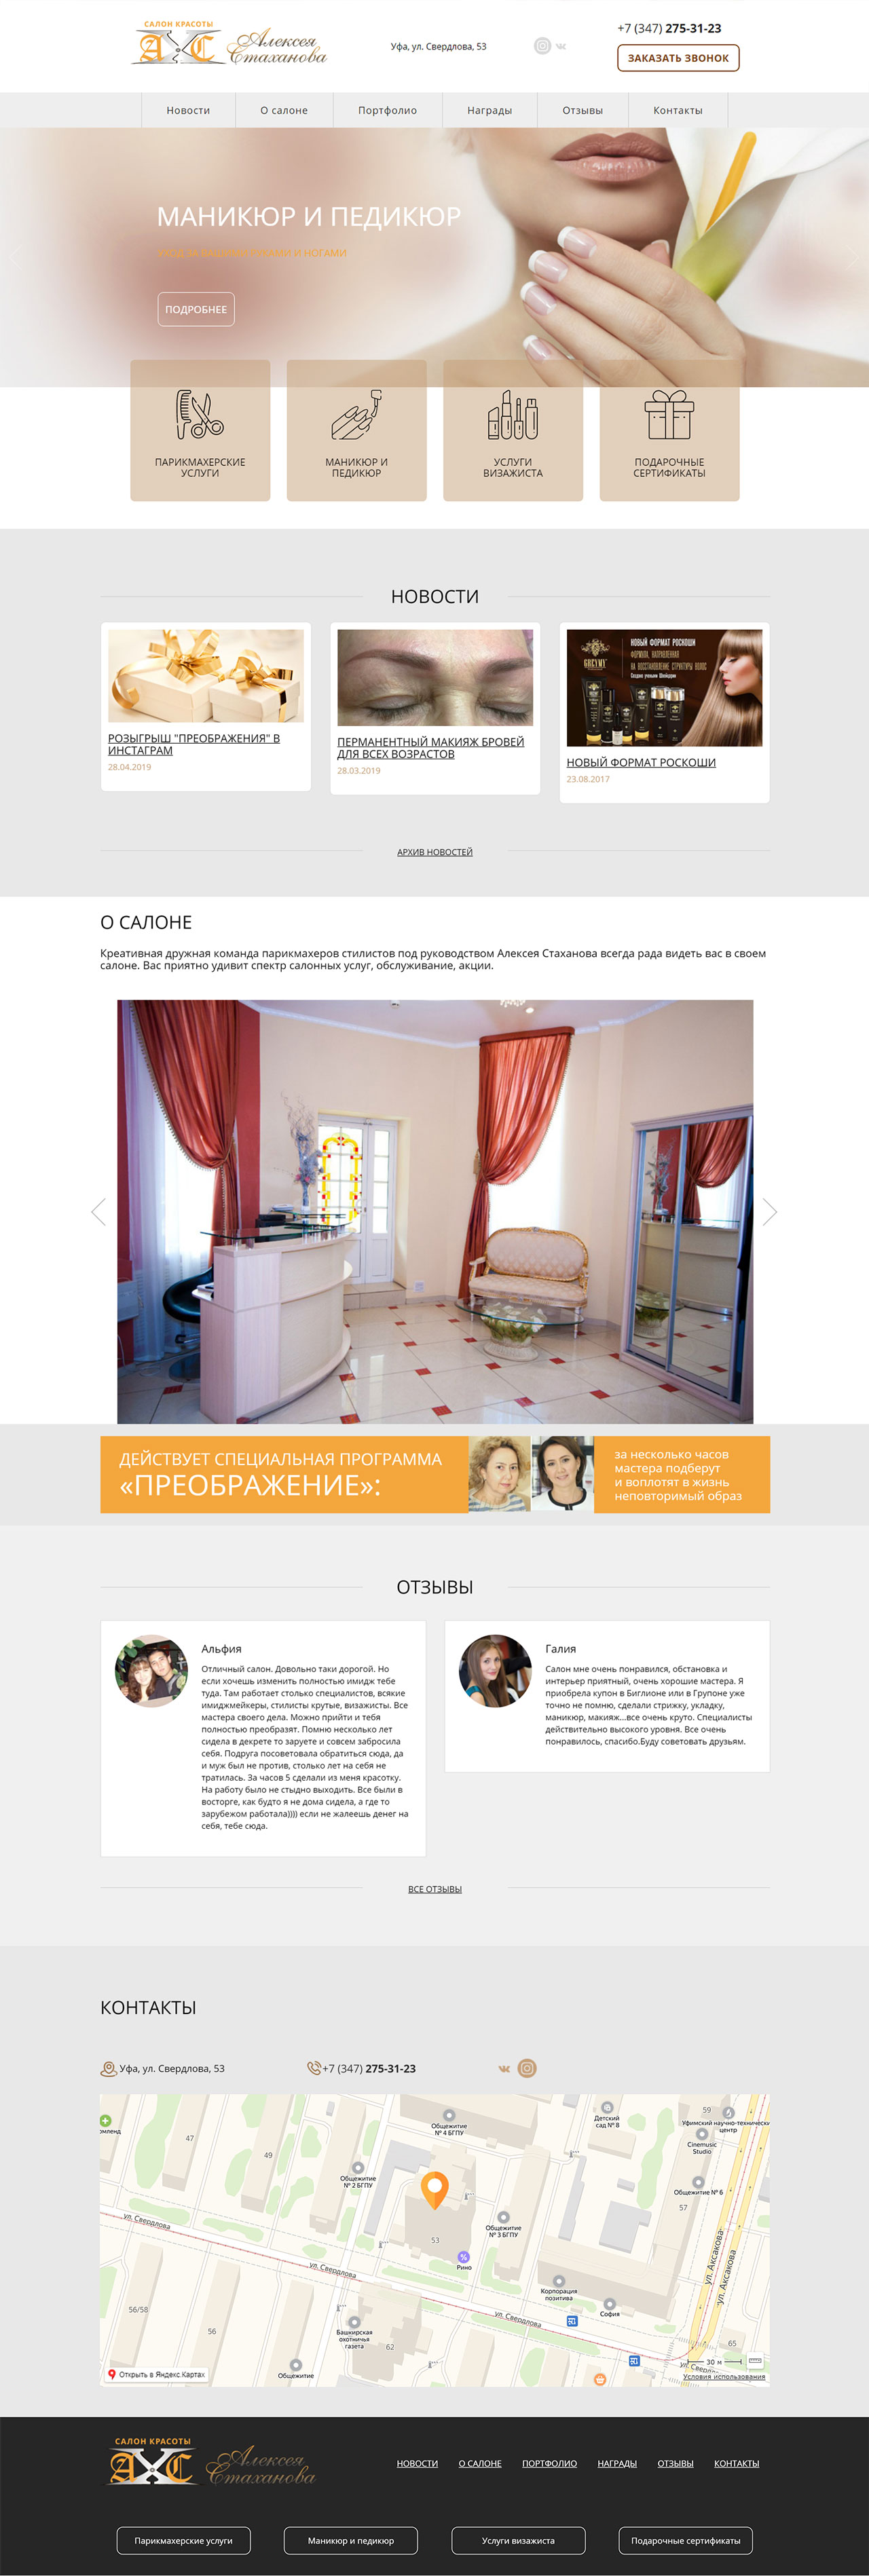 Создание корпоративного сайта Салон красоты Алексея Стаханова